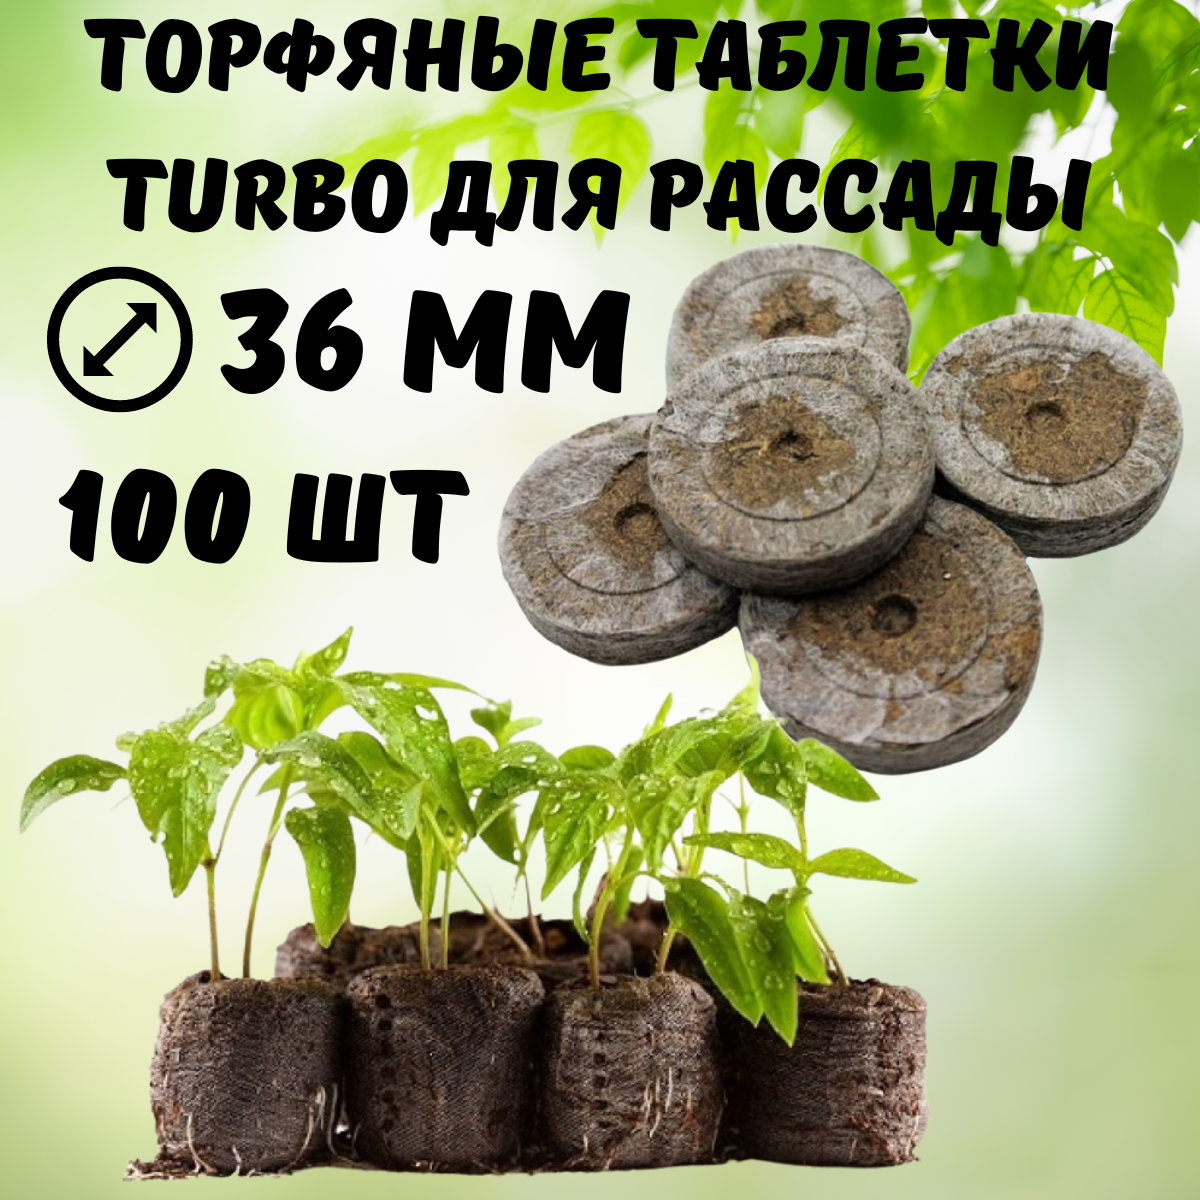 Turbo Торфяные таблетки для рассады Turbo 36 мм 100 шт